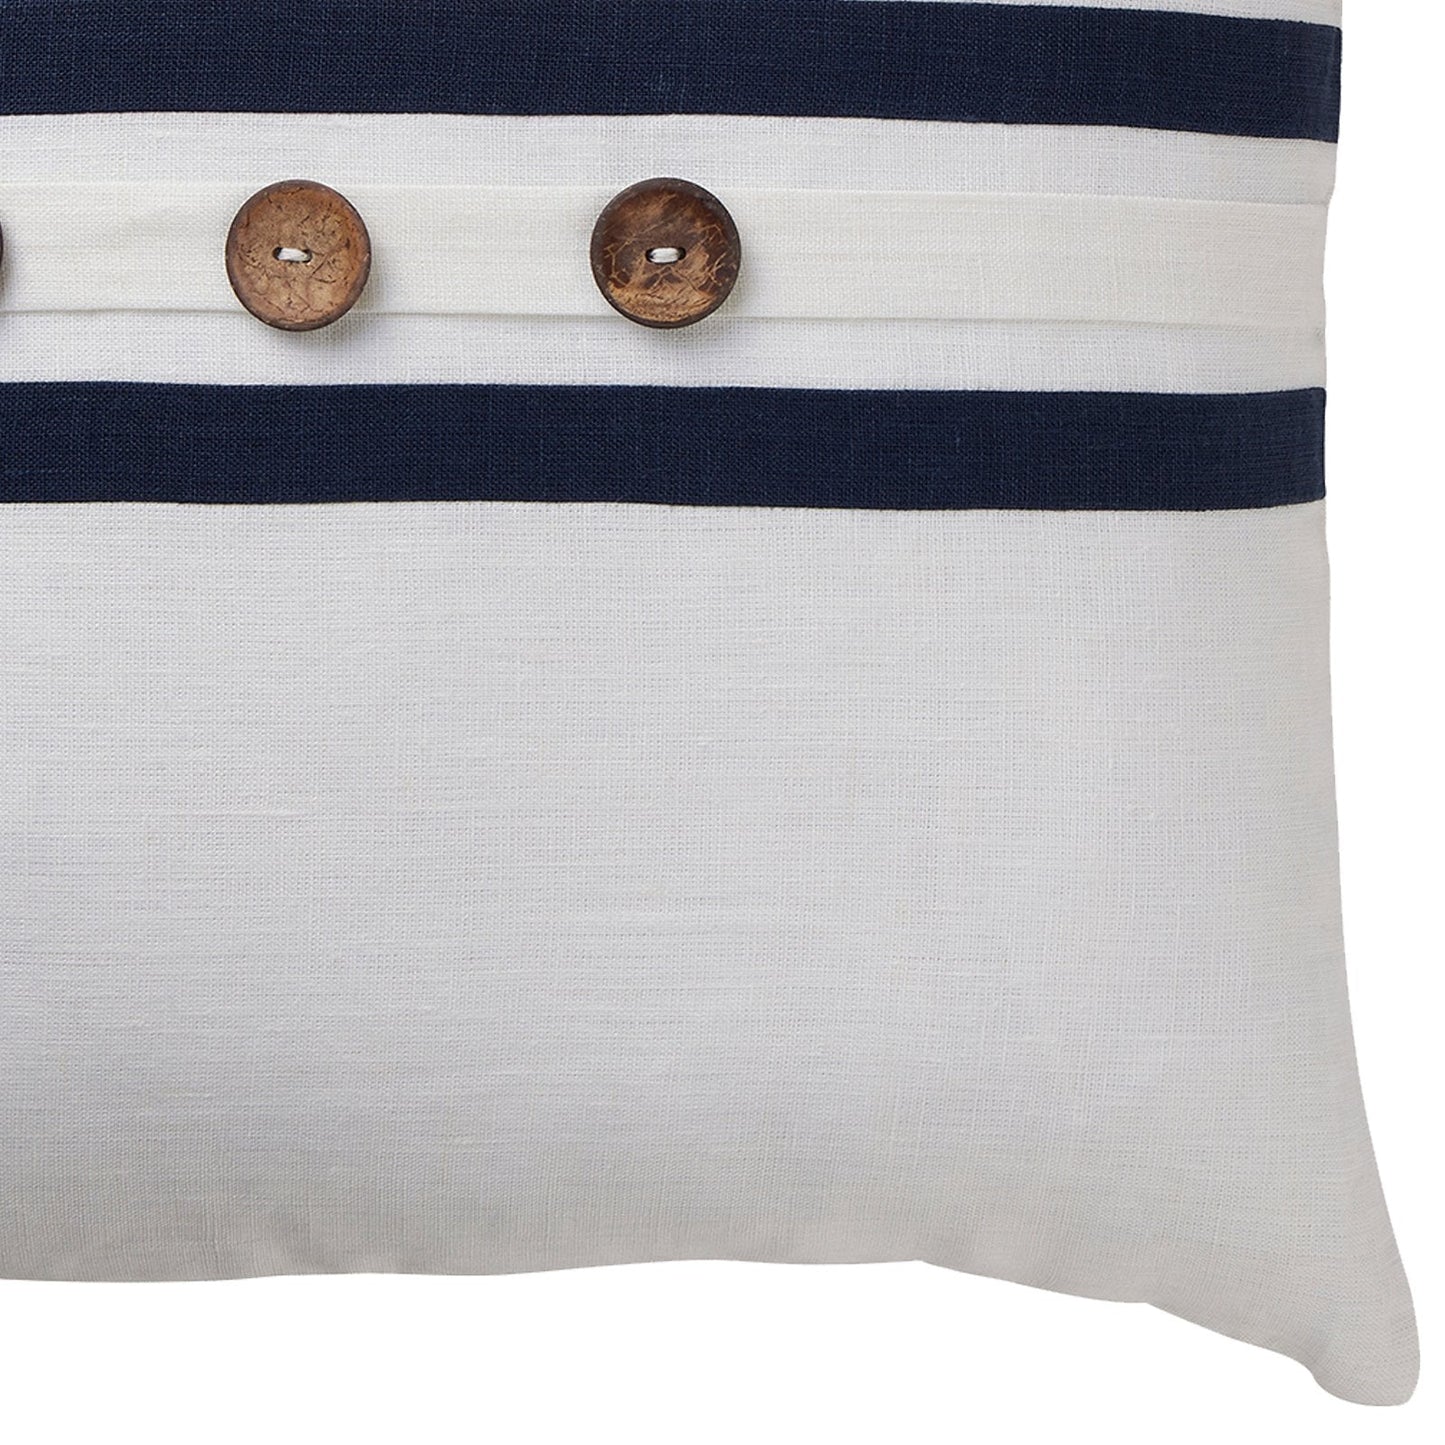 Linen Coconut Navy Cushion